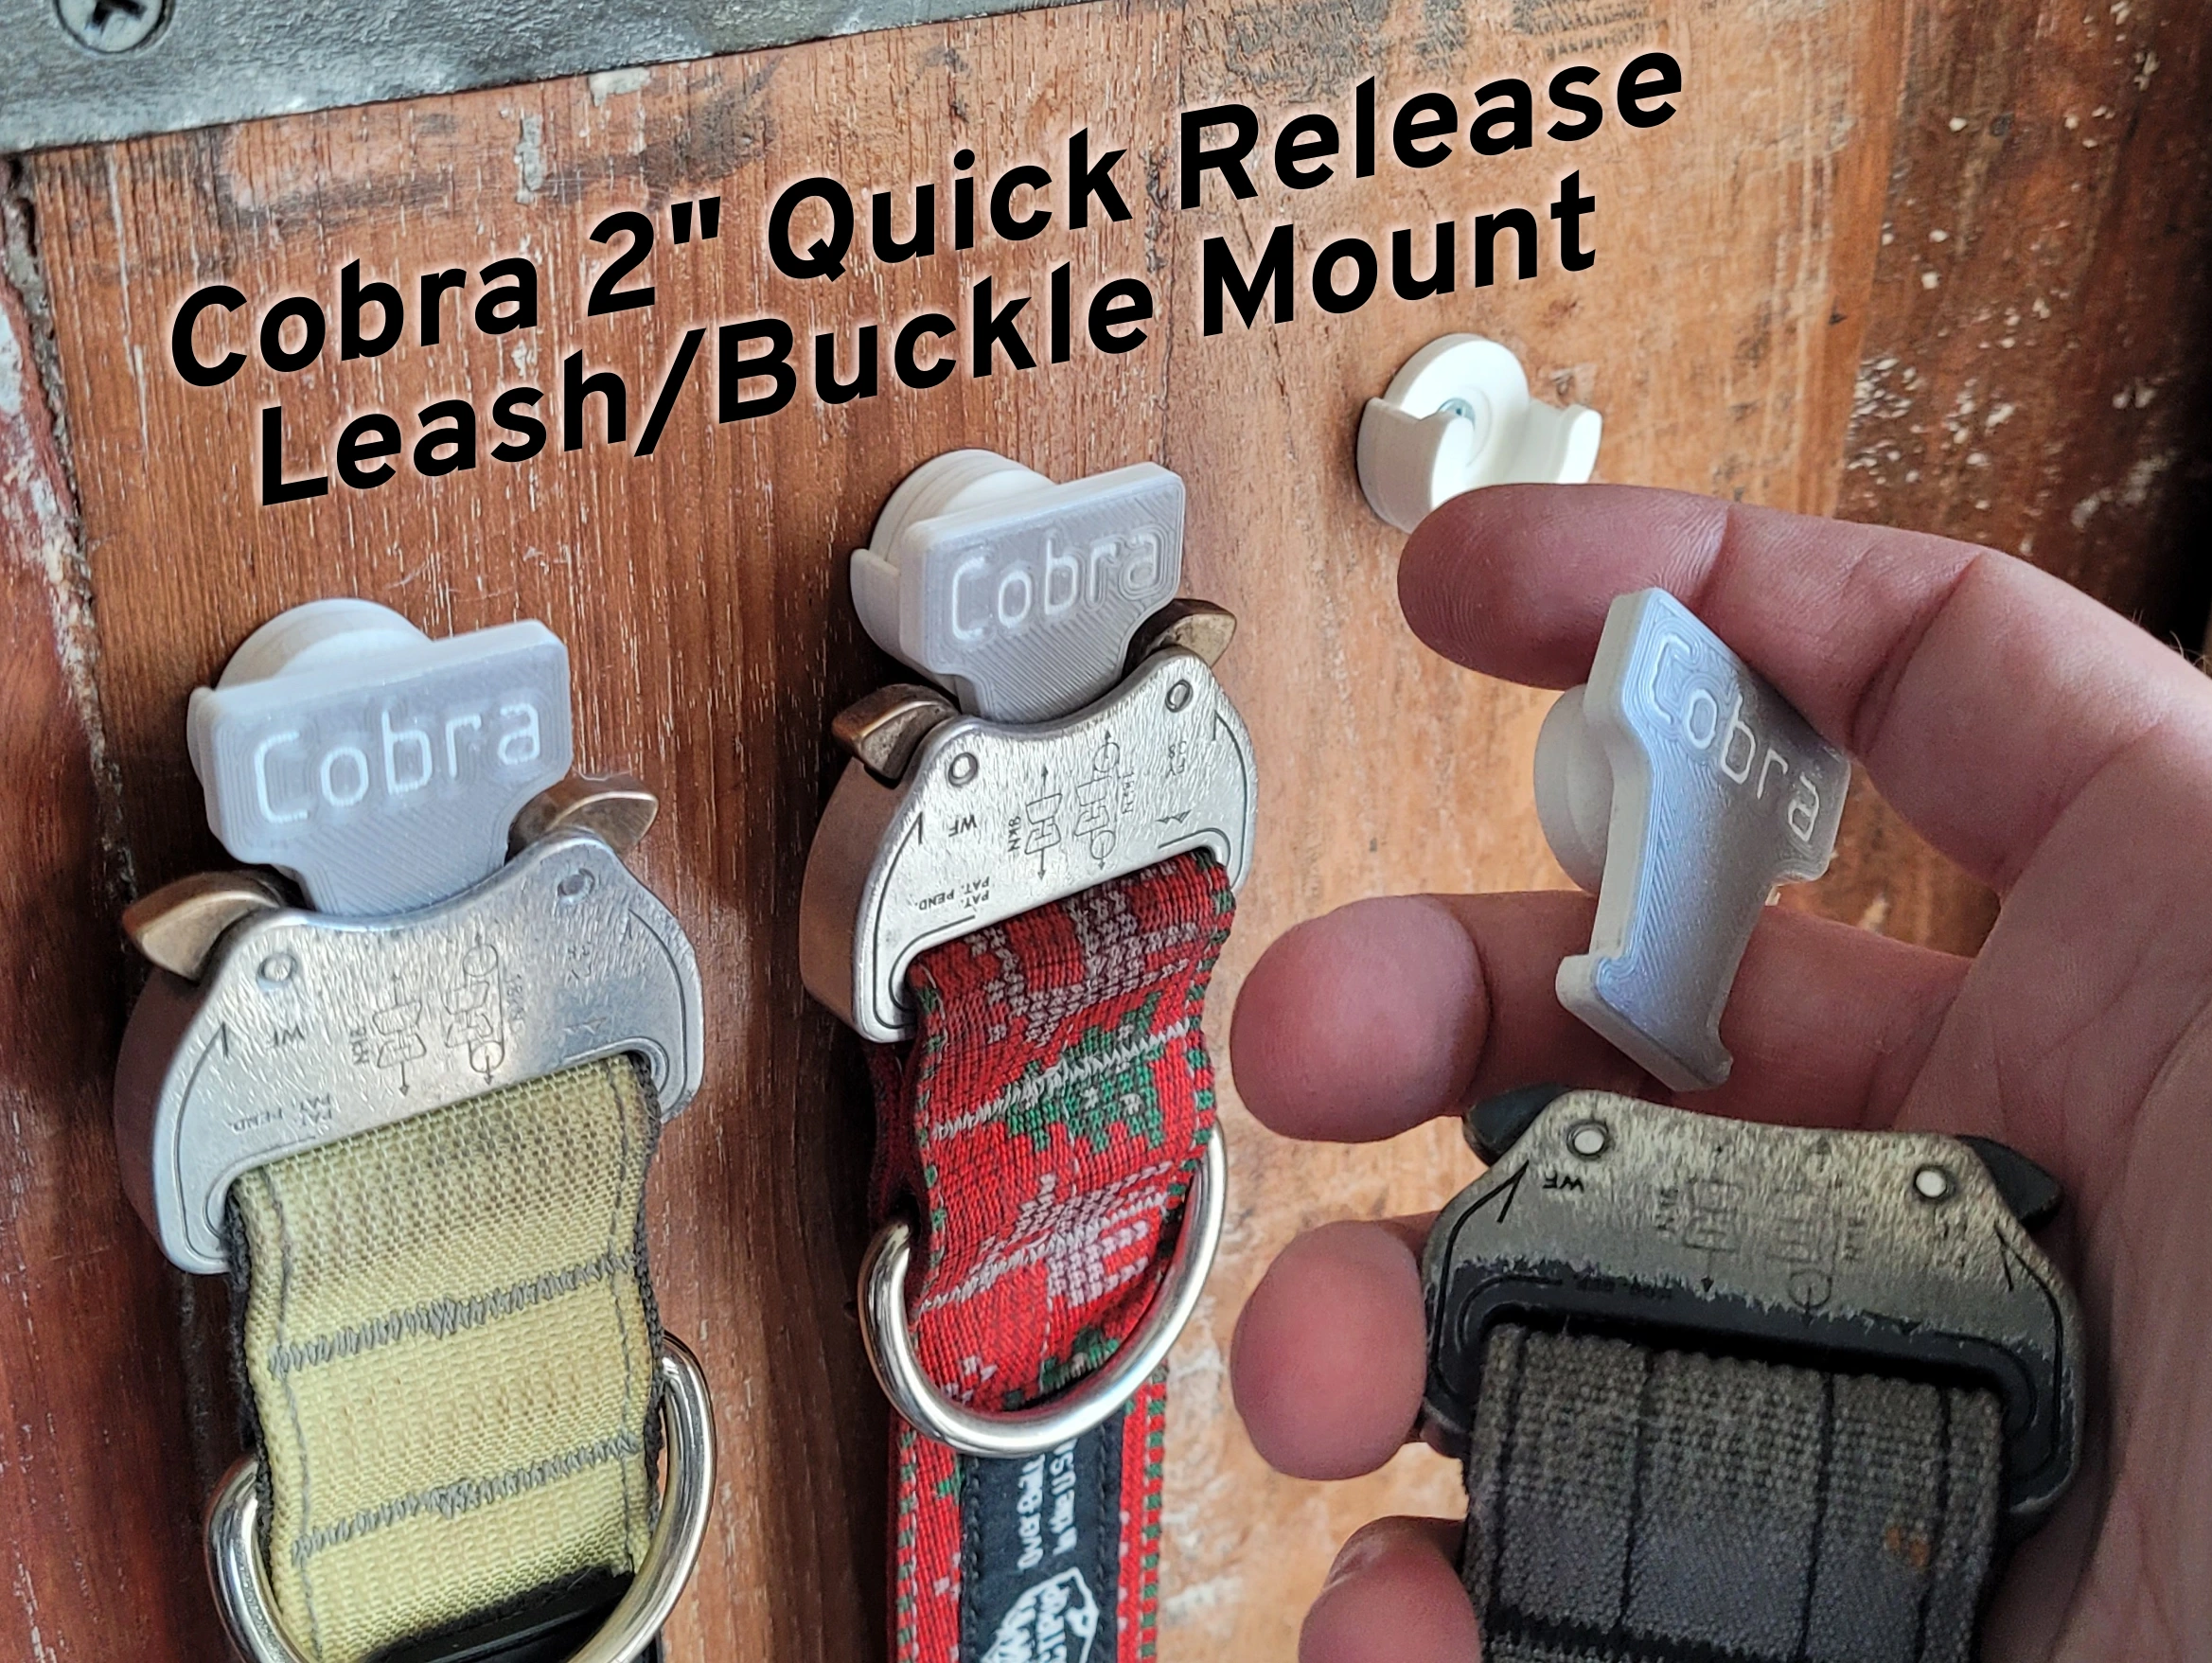 COBRA Quick Release Mount